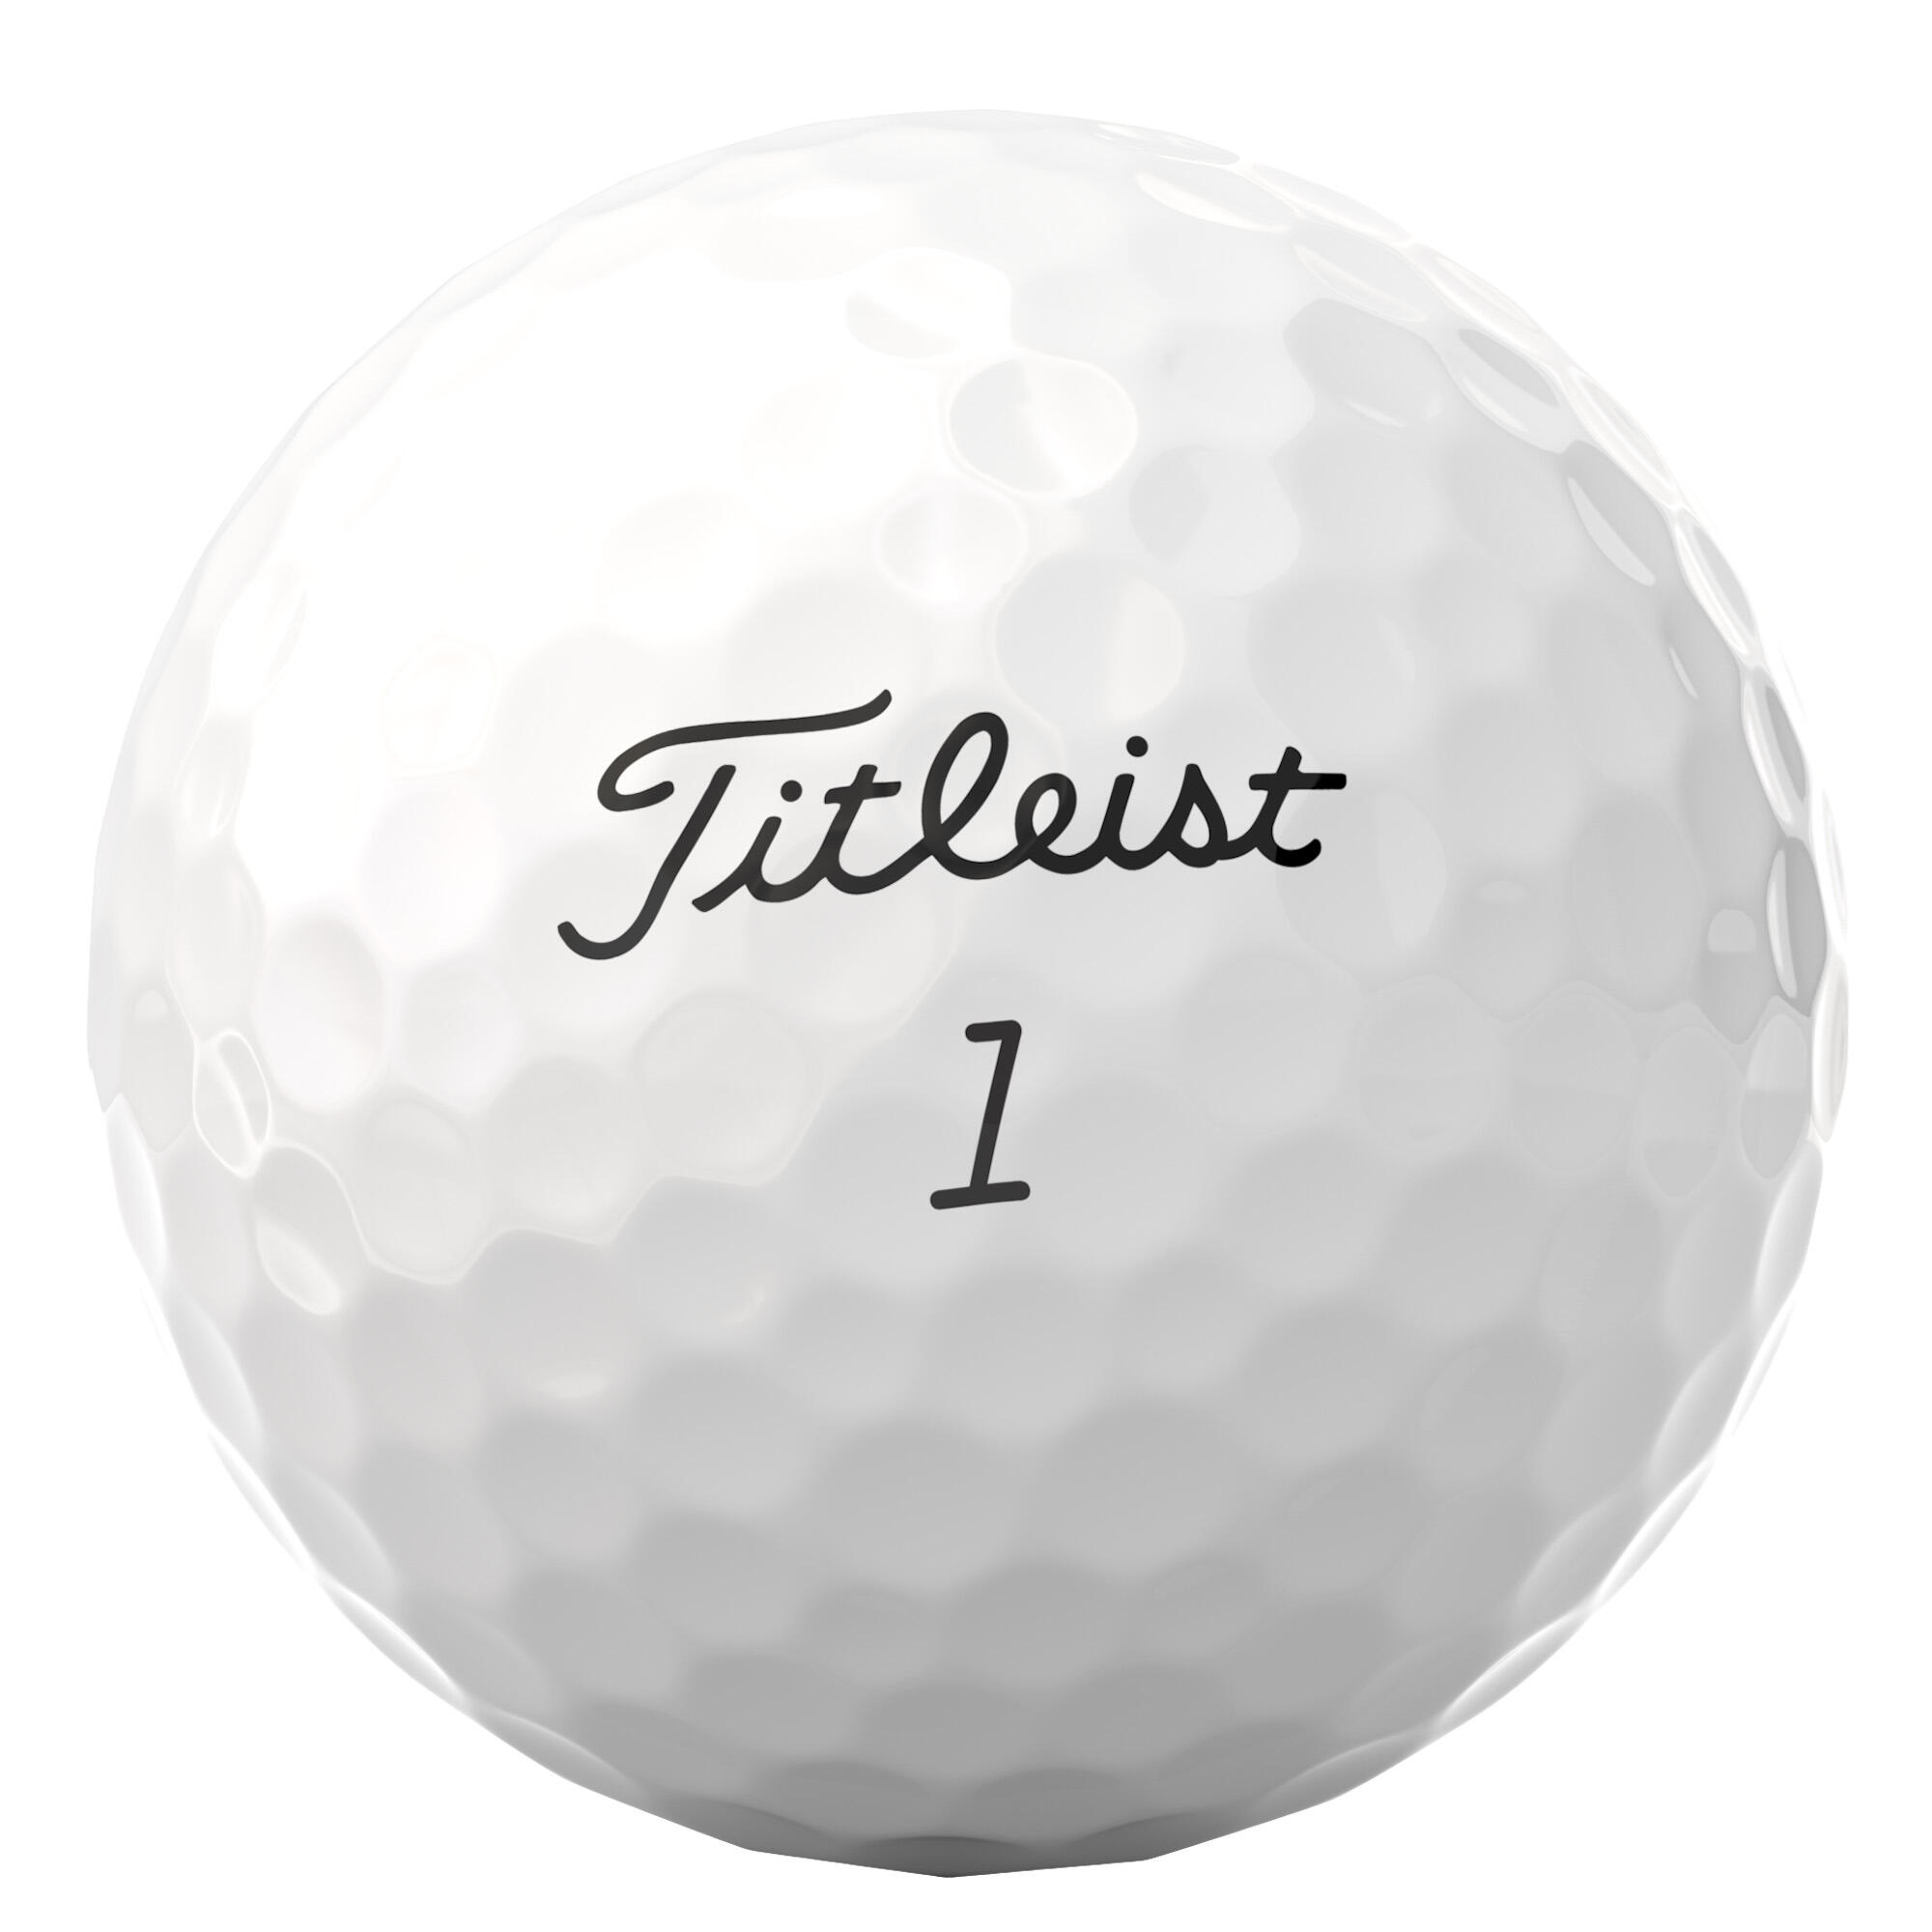 Golf ball x12 - TITLEIST Tour soft white 2/5